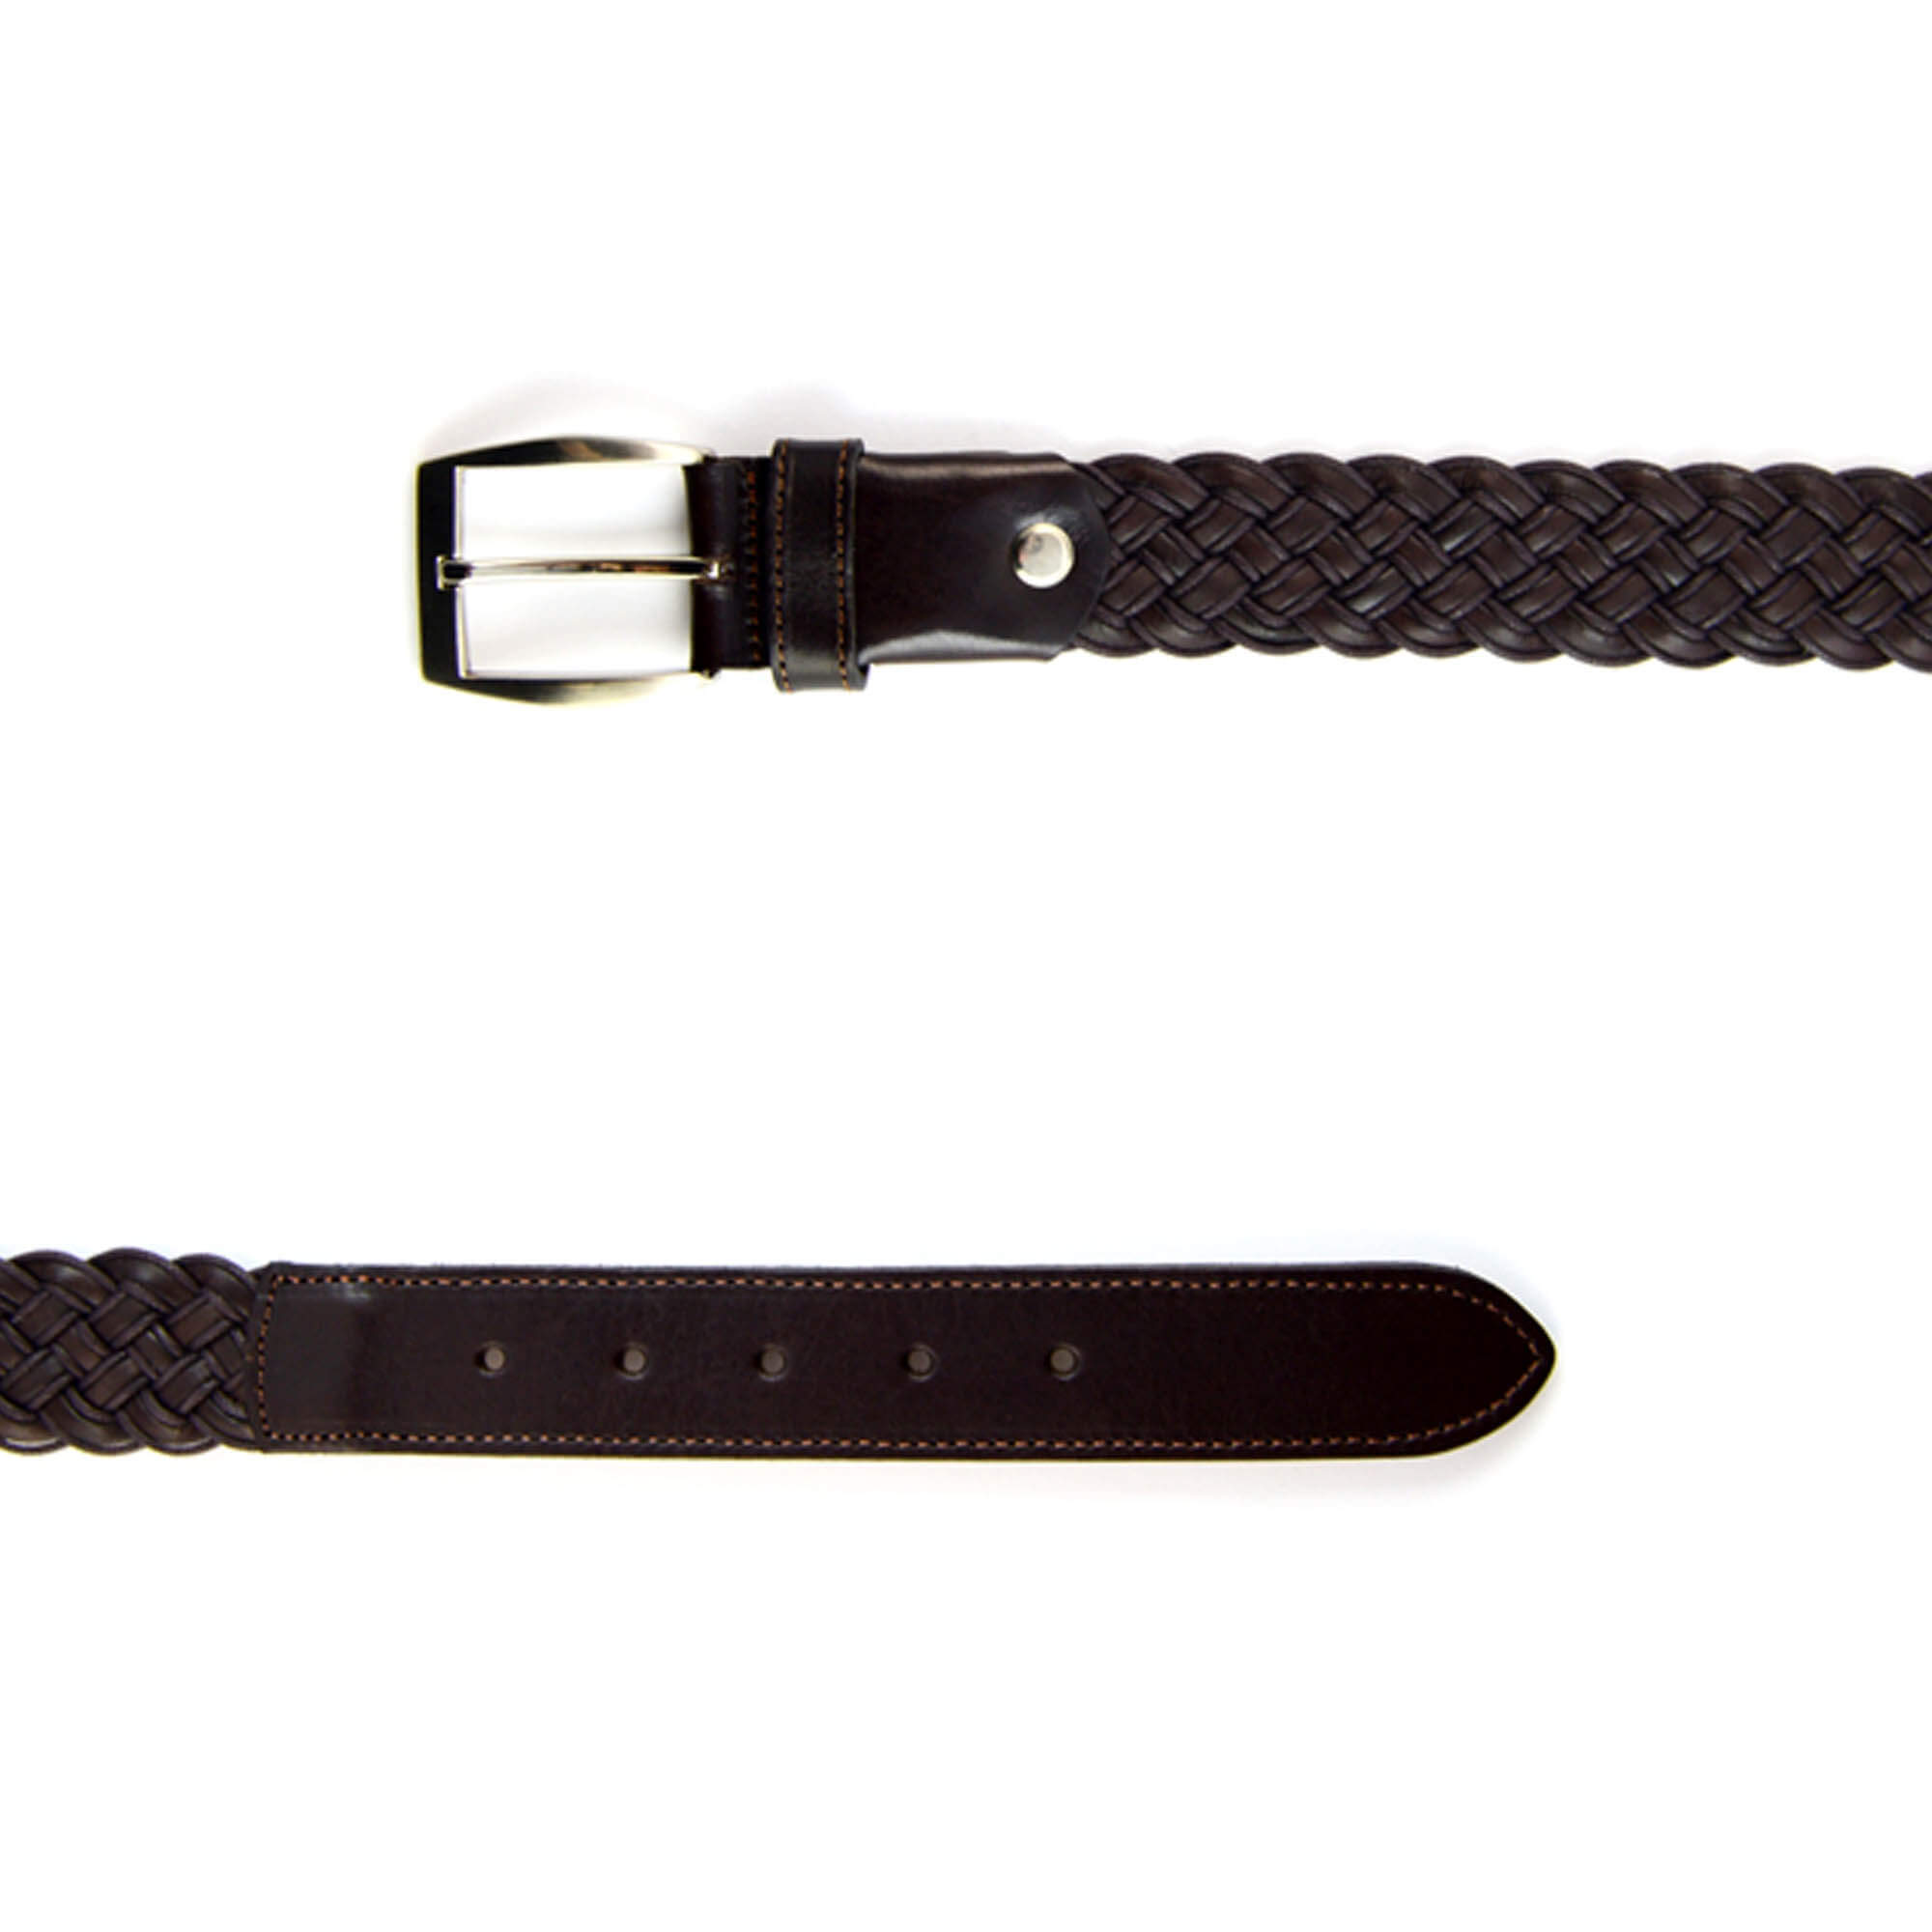 Buy Mens Leather Woven Belt - Dark Brown 3.5 Cm - LeatherBeltsOnline